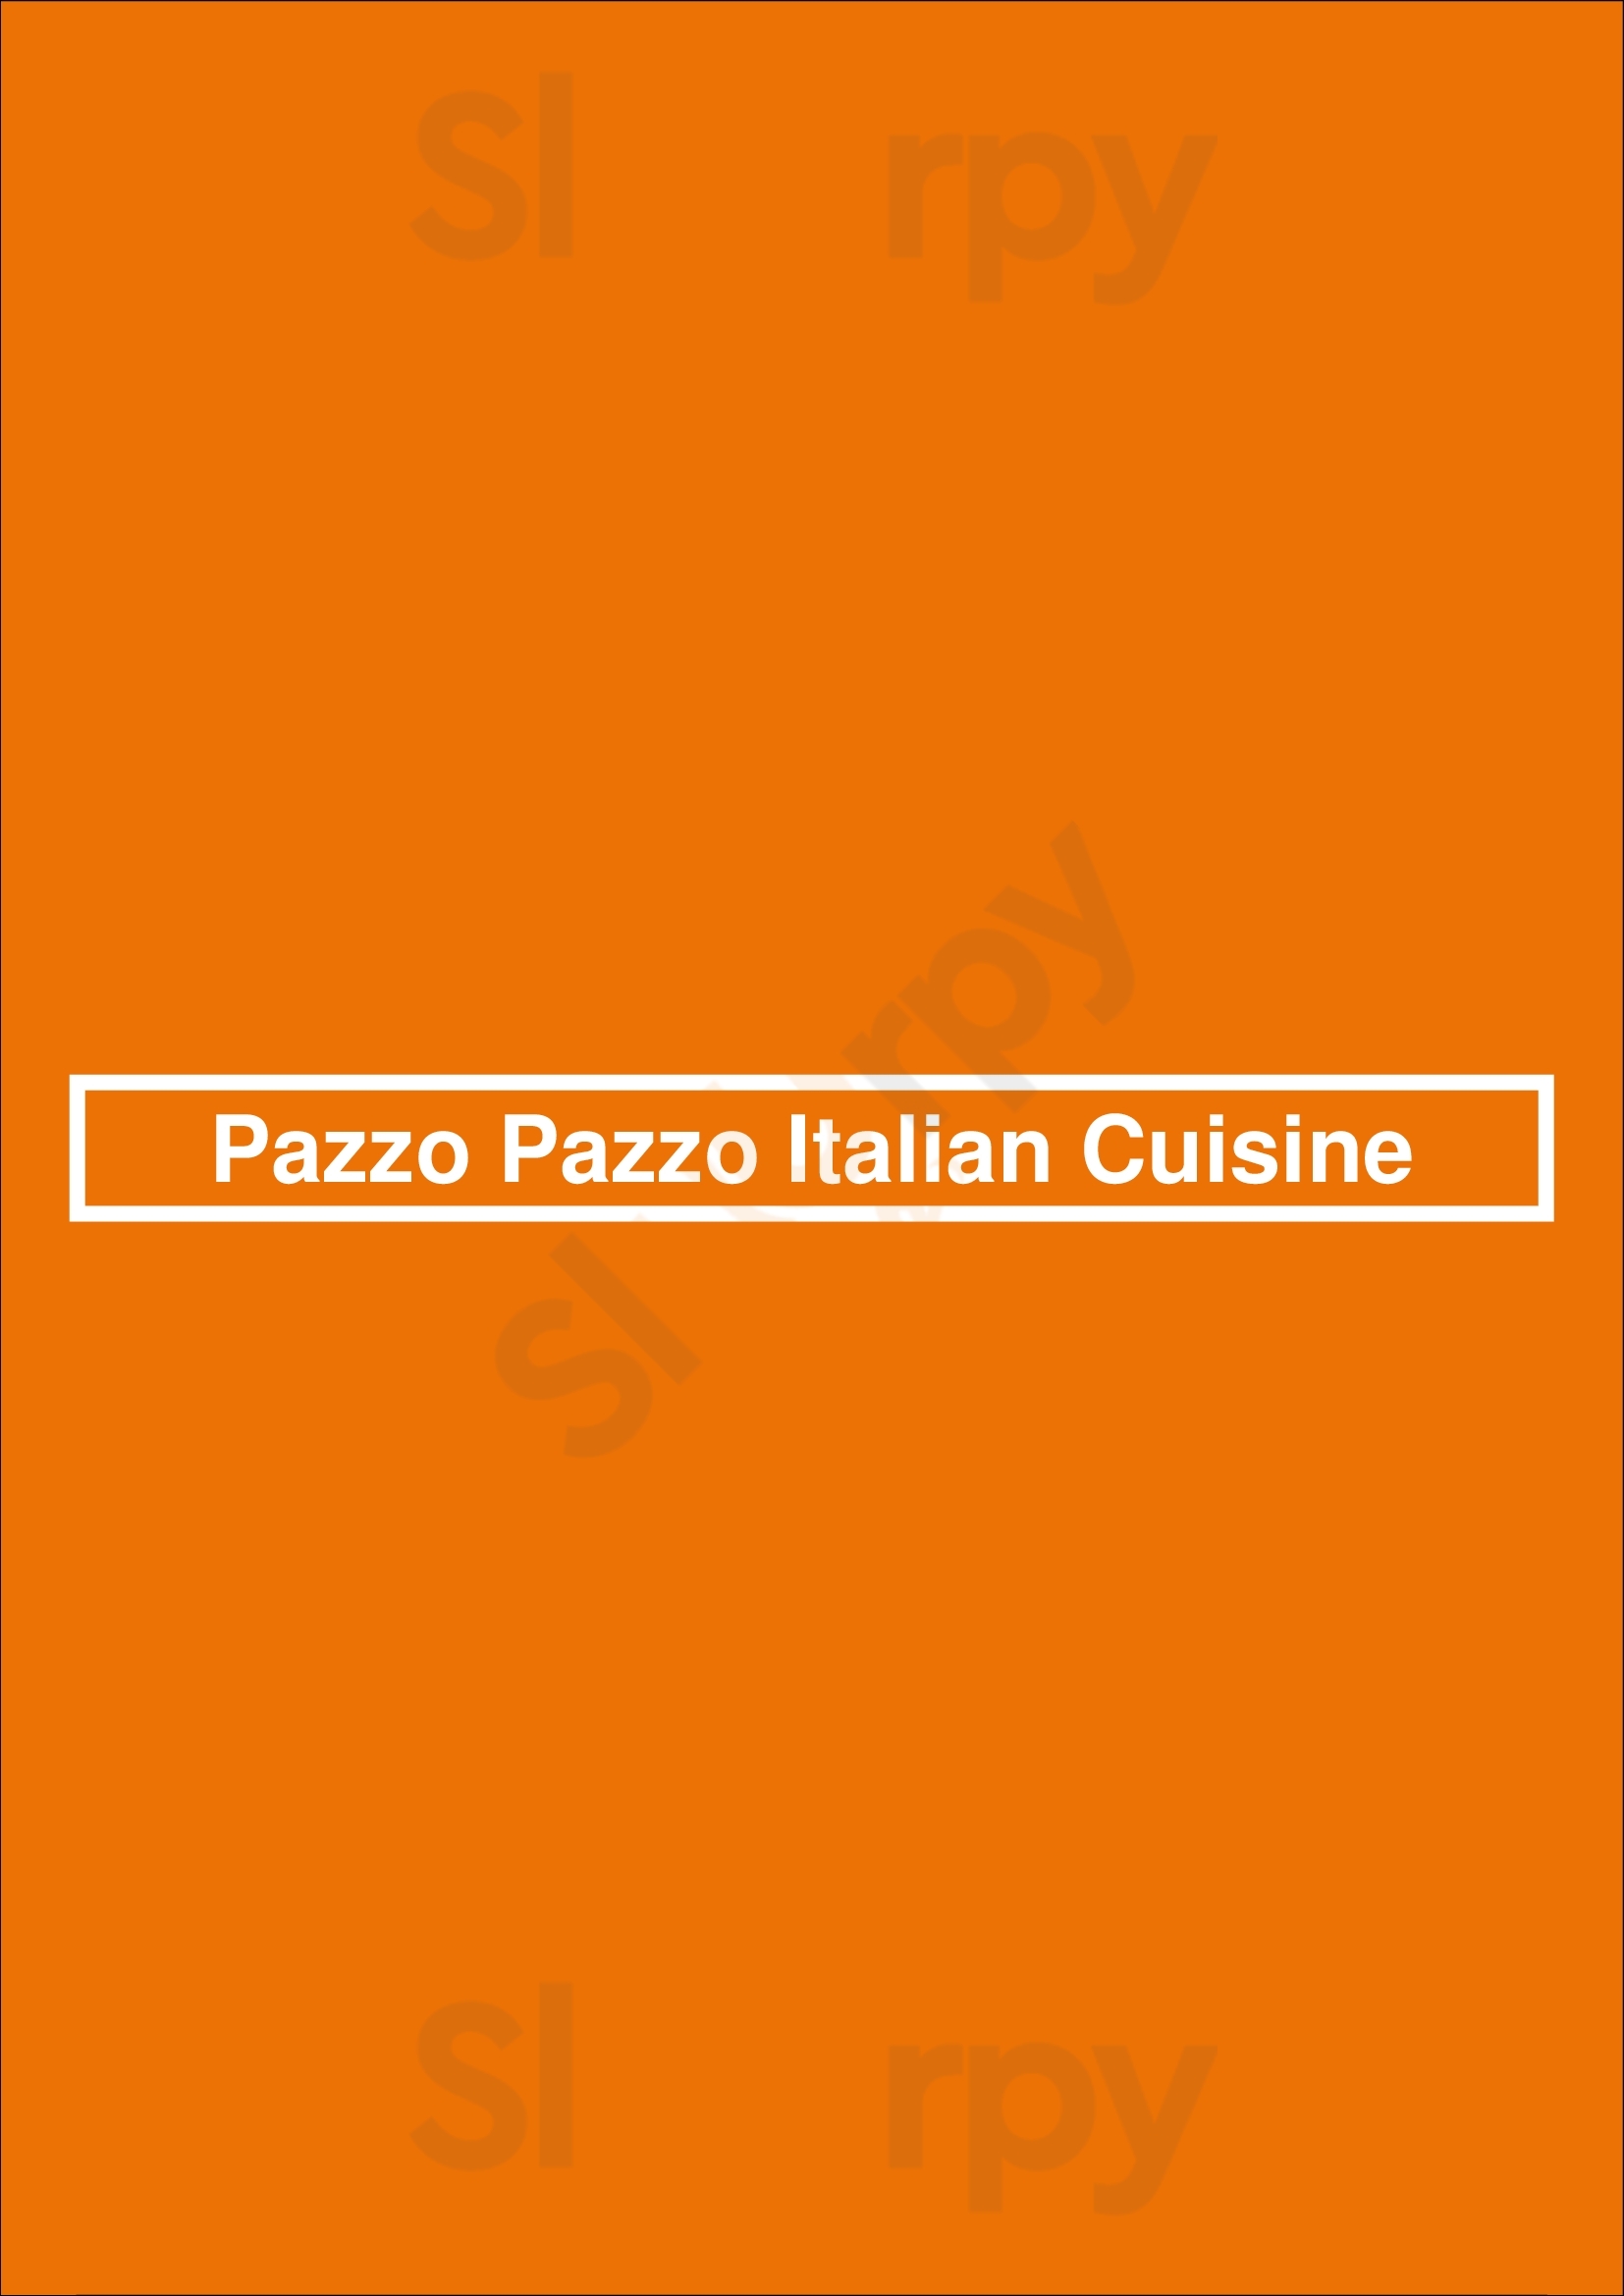 Pazzo Pazzo Italian Cuisine Edmonton Menu - 1